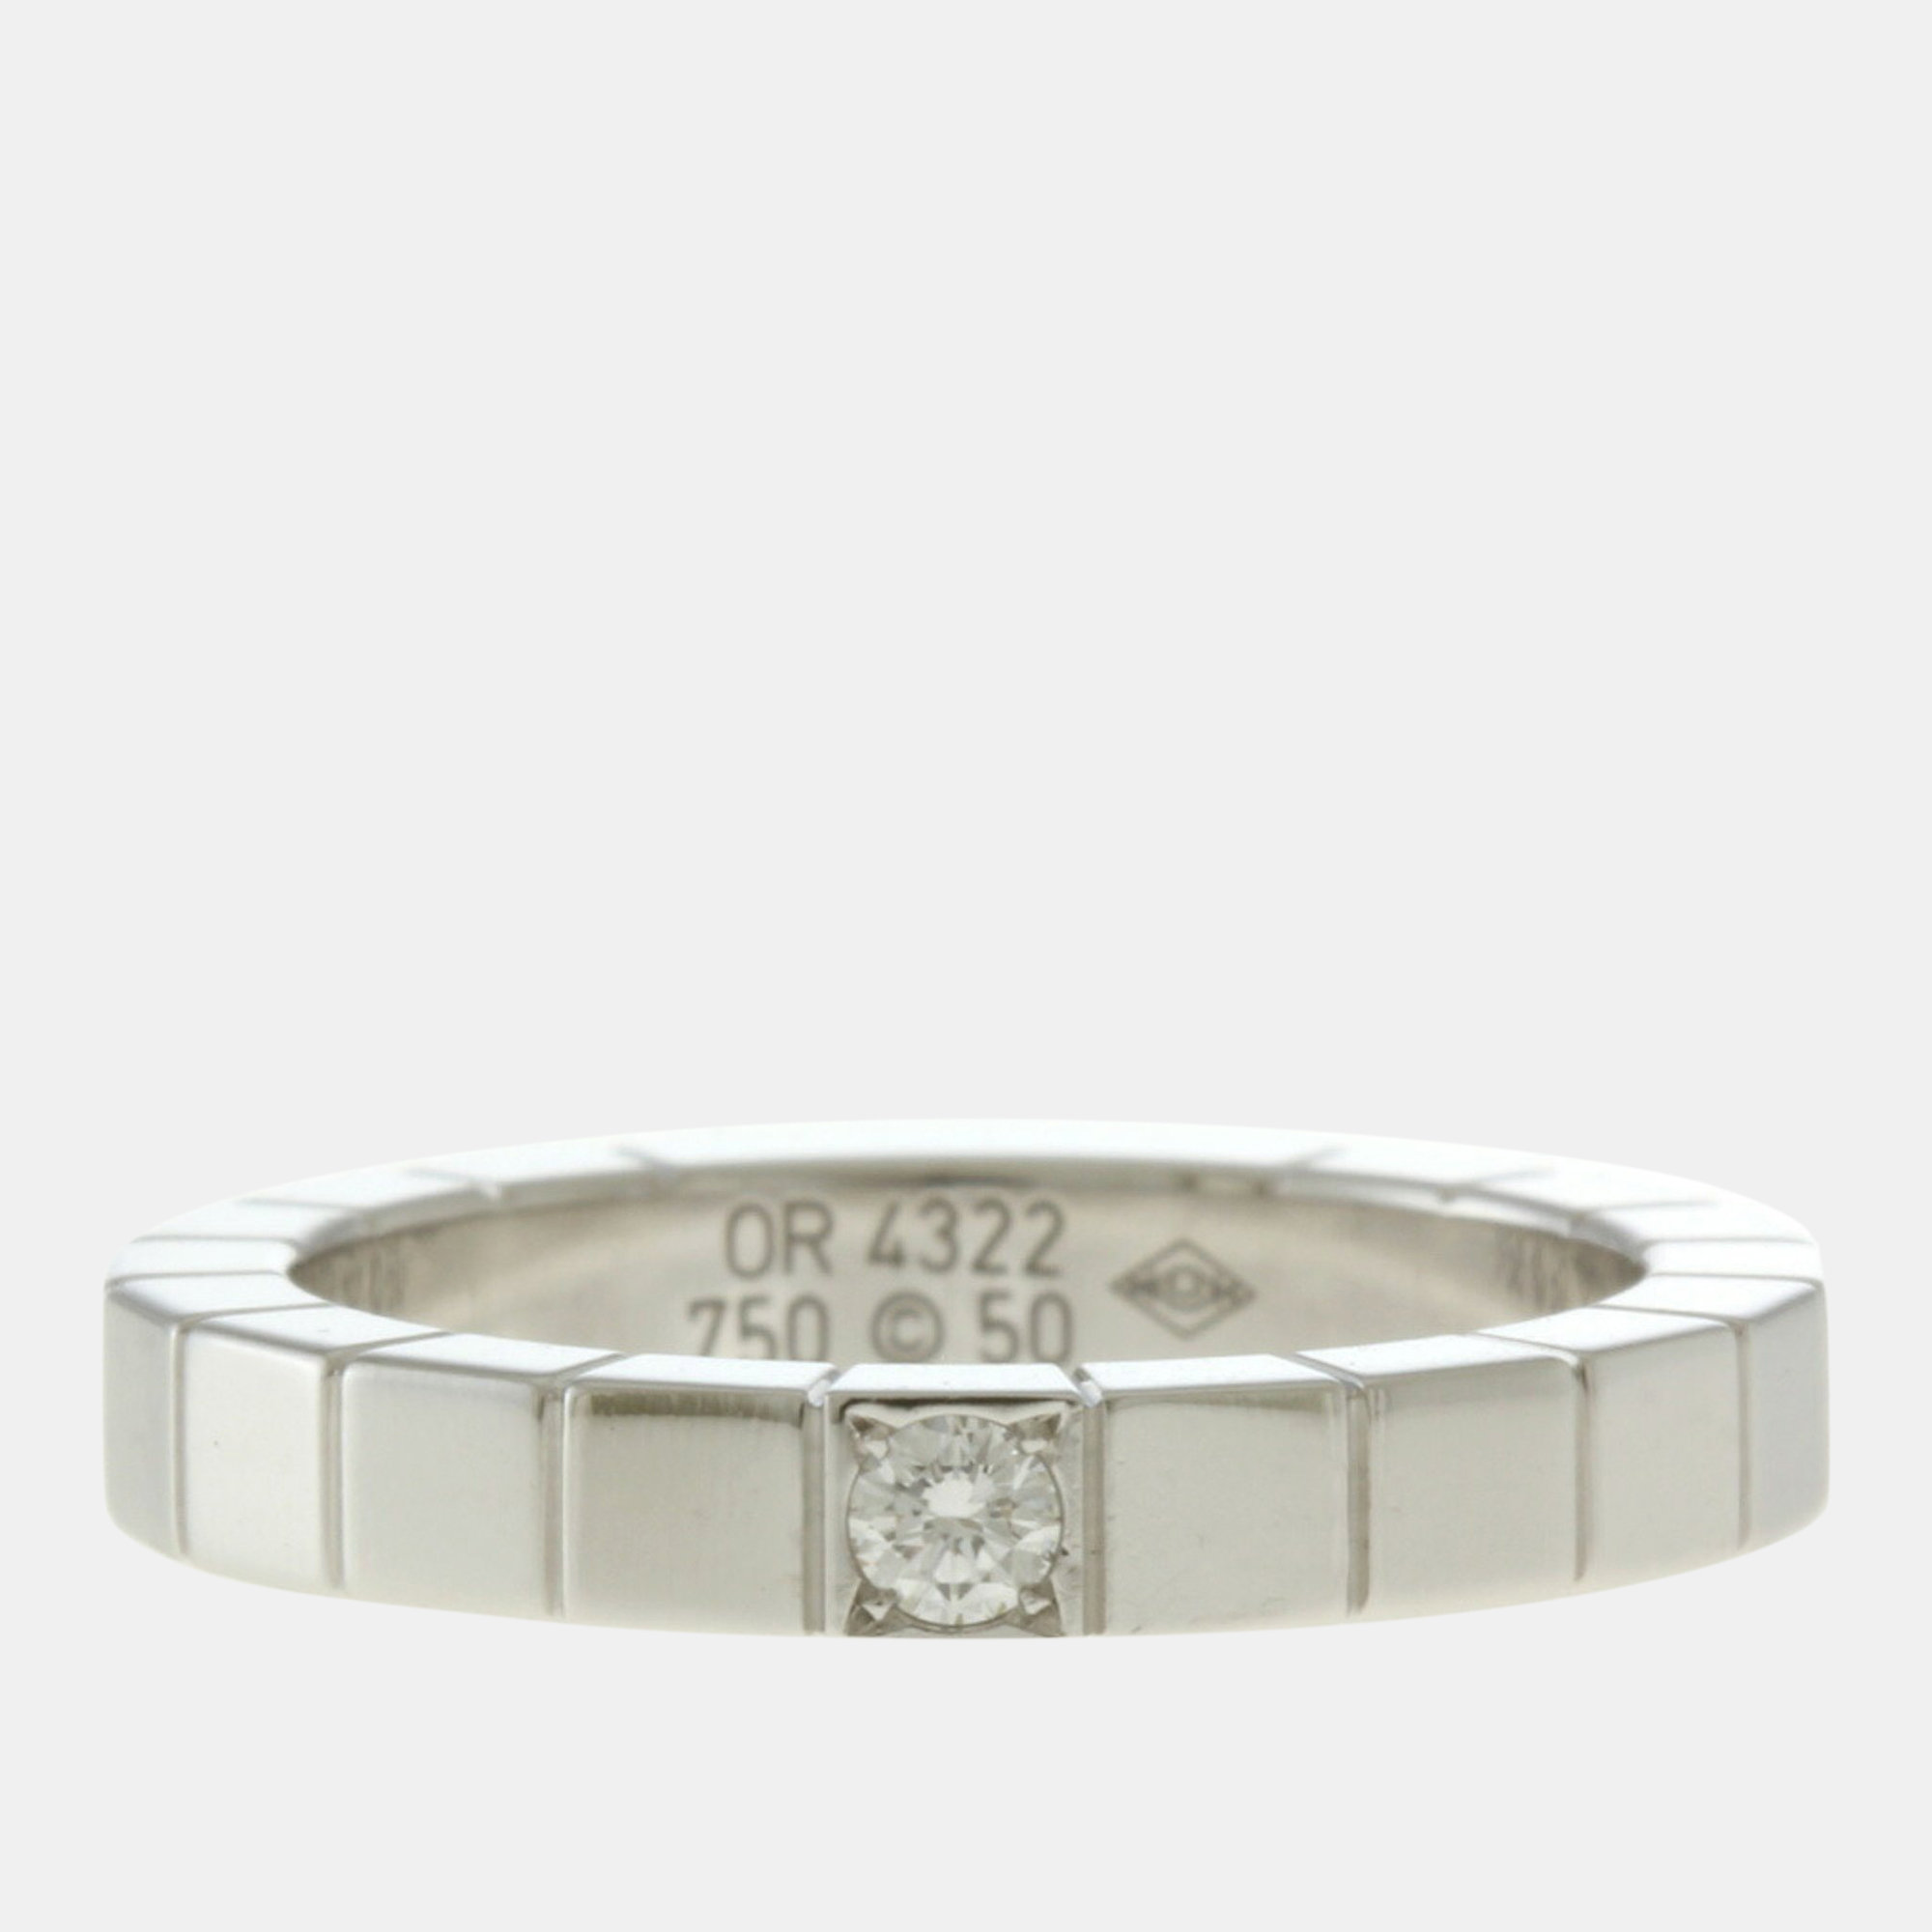 Cartier 18K White Gold And Diamond Lanieres Band Ring EU 50